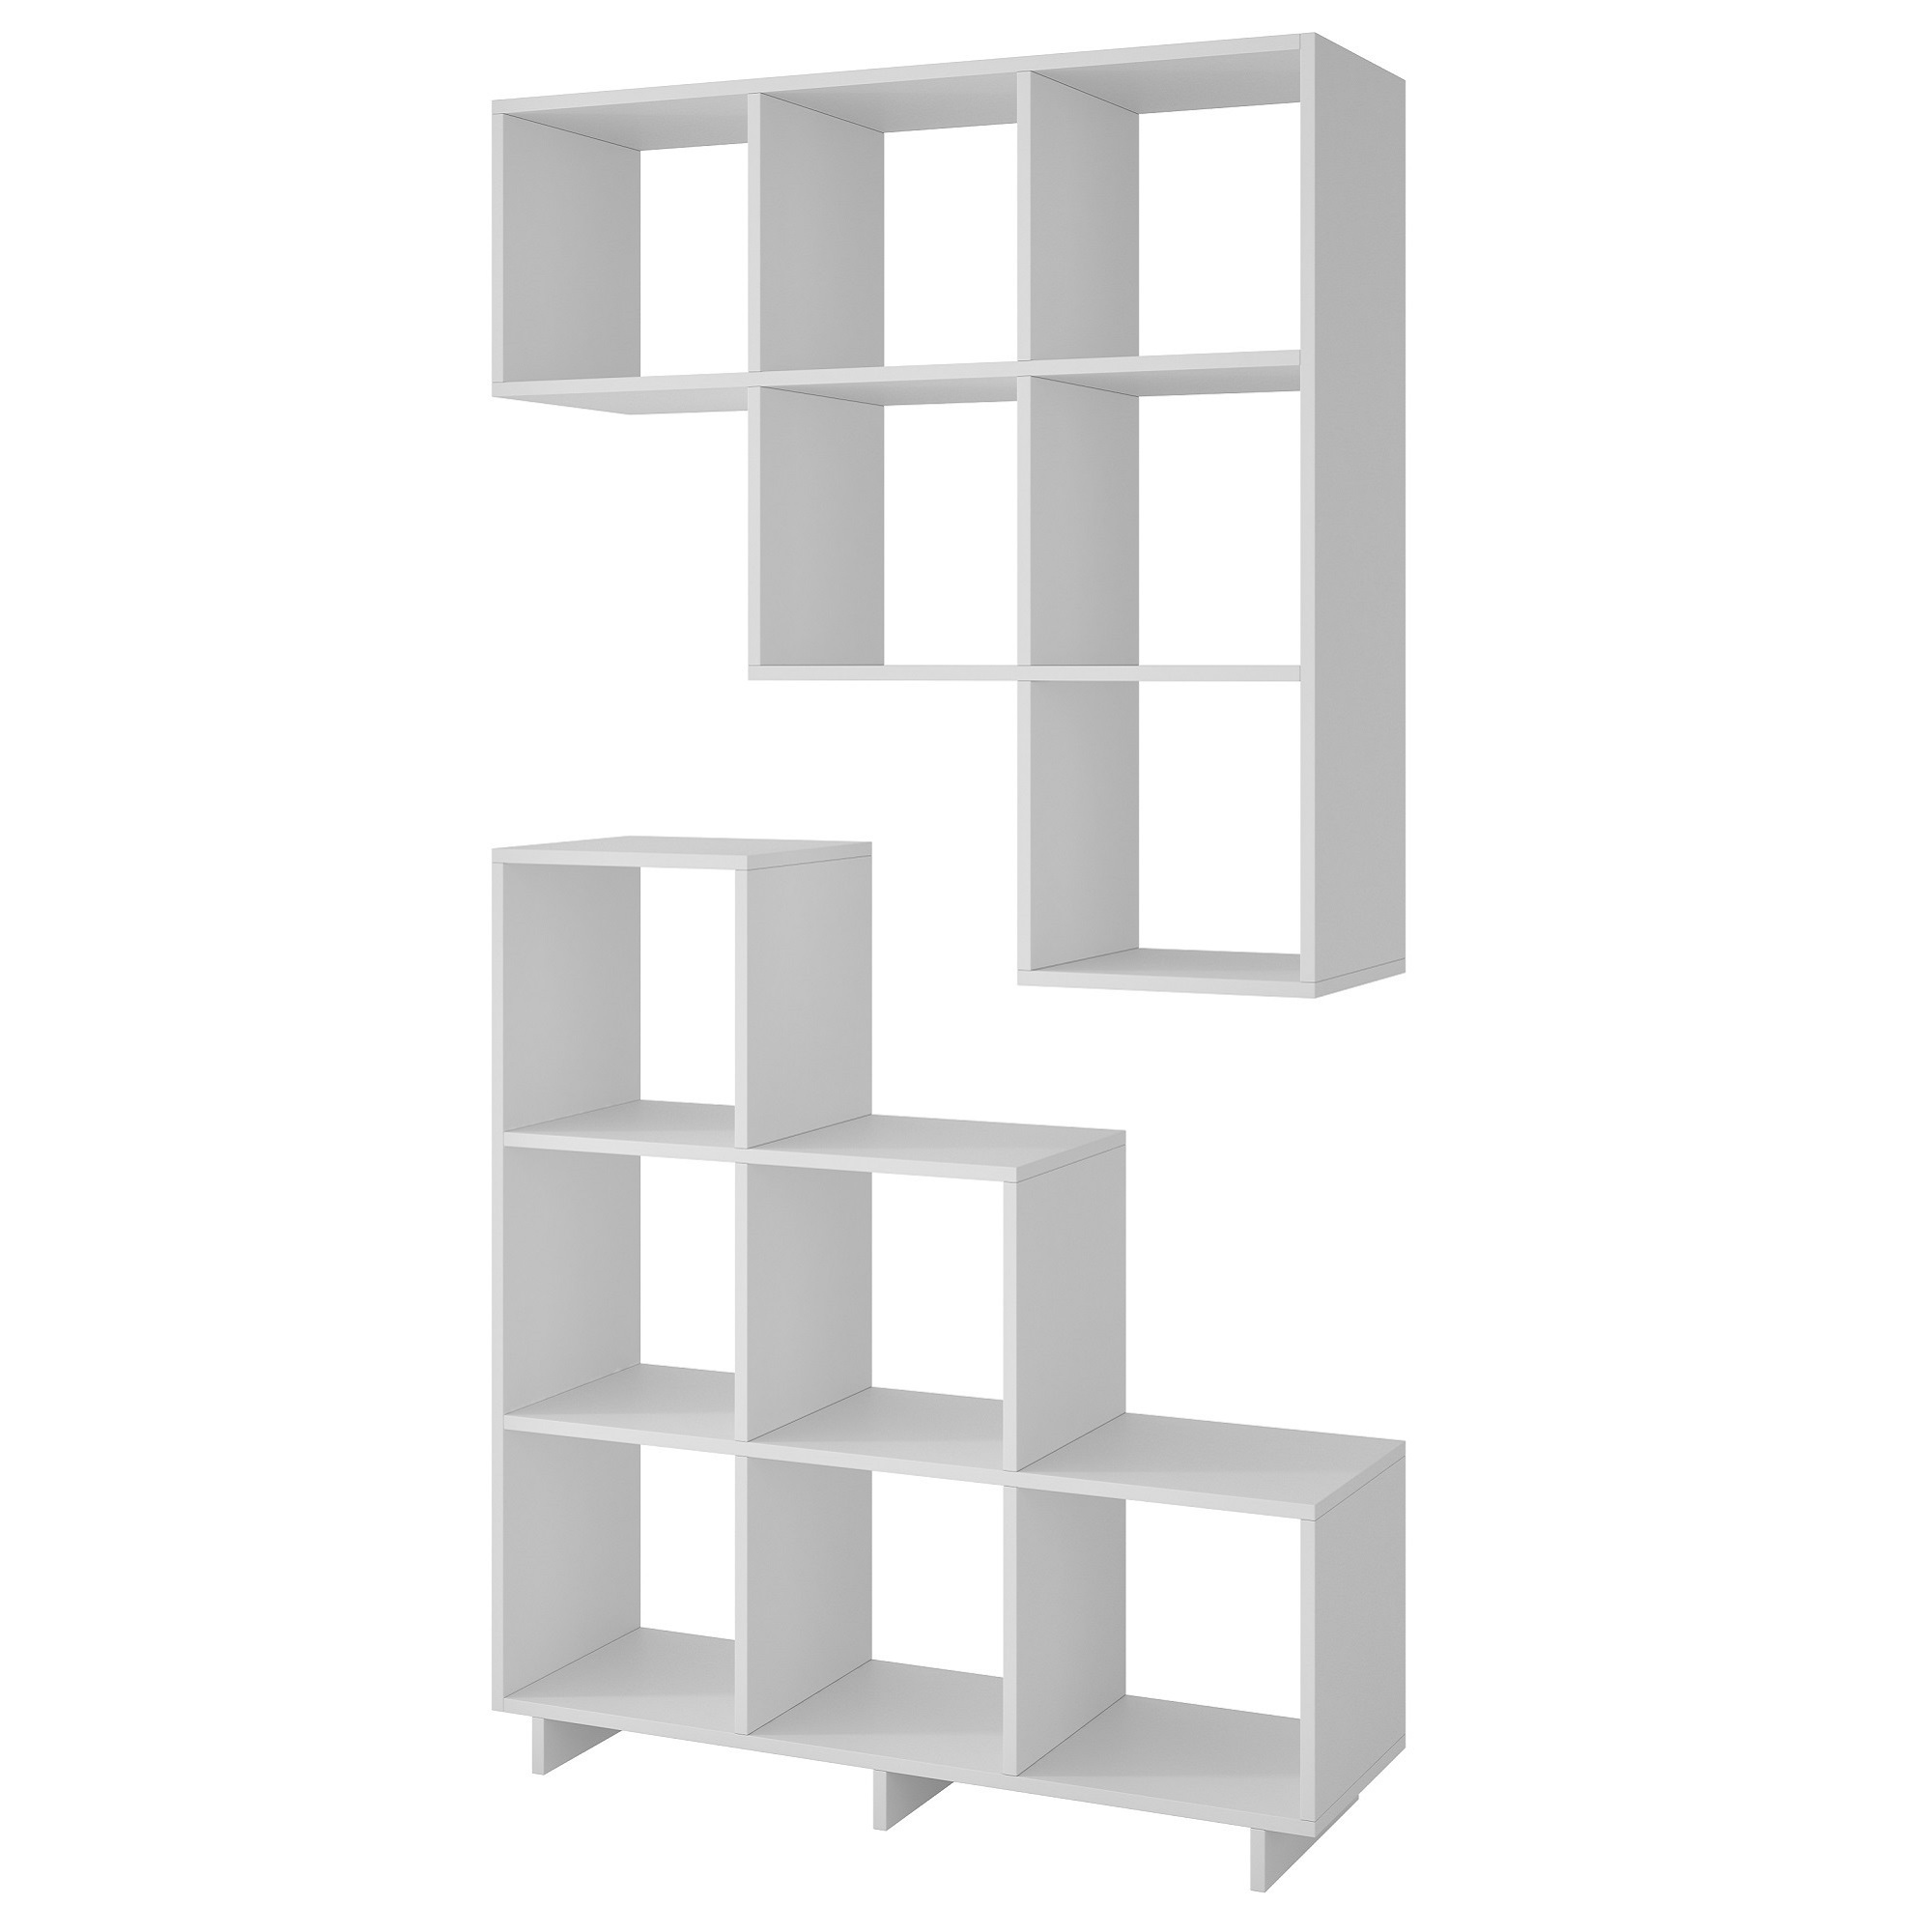 Manhattan Comfort, Cascavel Stair Cubby 6 Cube Shelves White Set of 2 Width 36.02 in, Height 38.58 in, Depth 11.57 in, Model 2-26AMC6